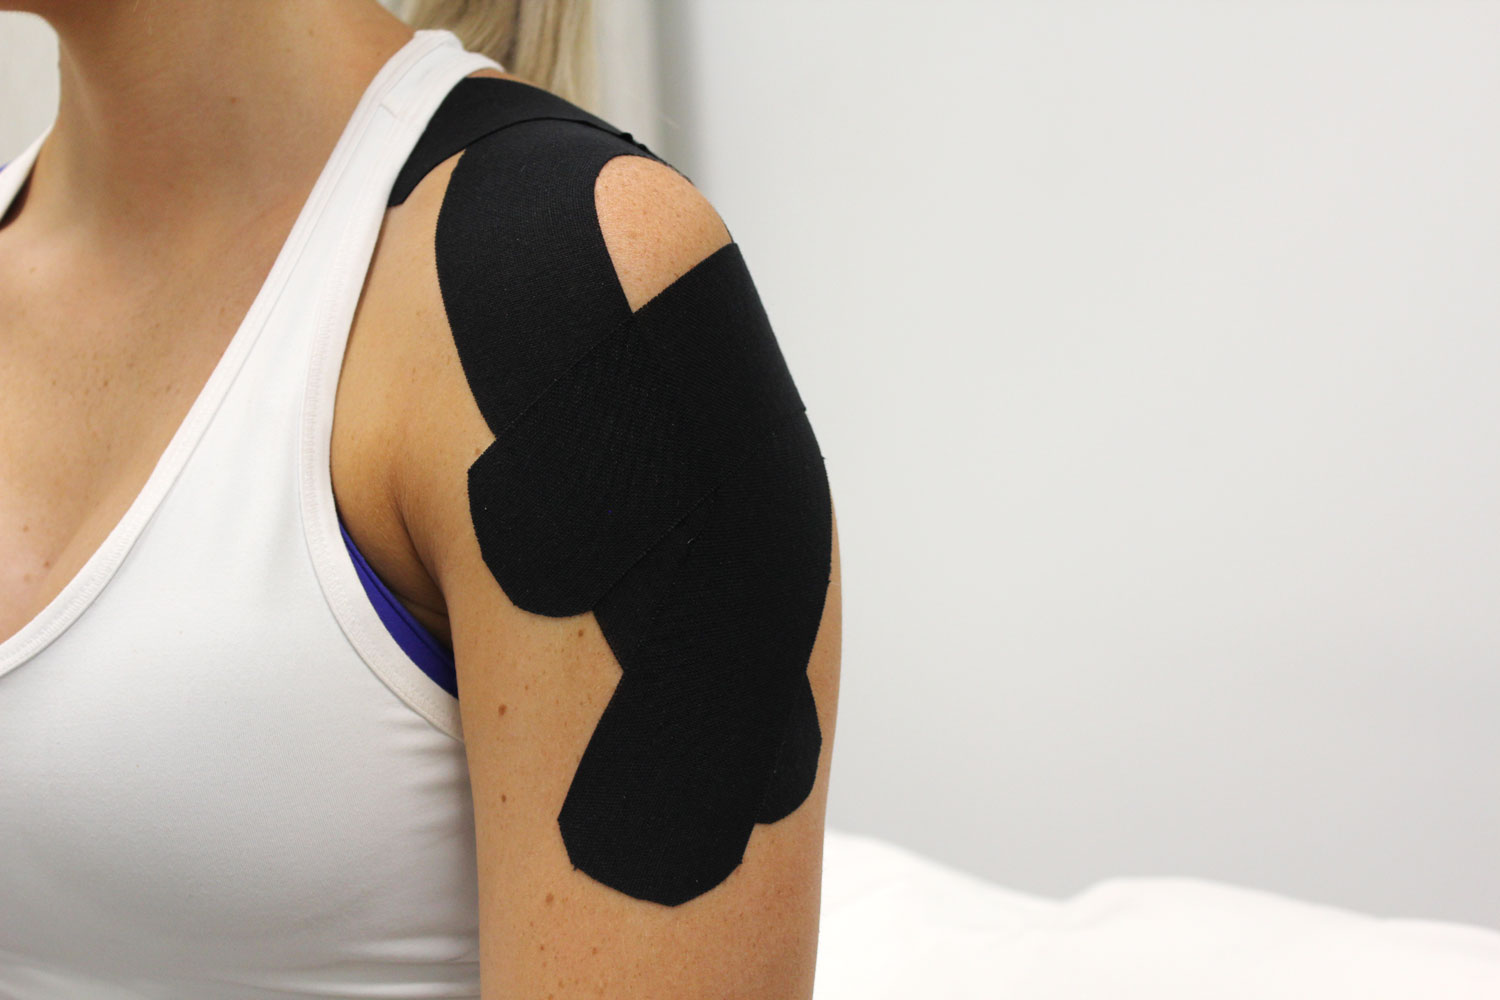 shoulder pain & rotator cuff injuries